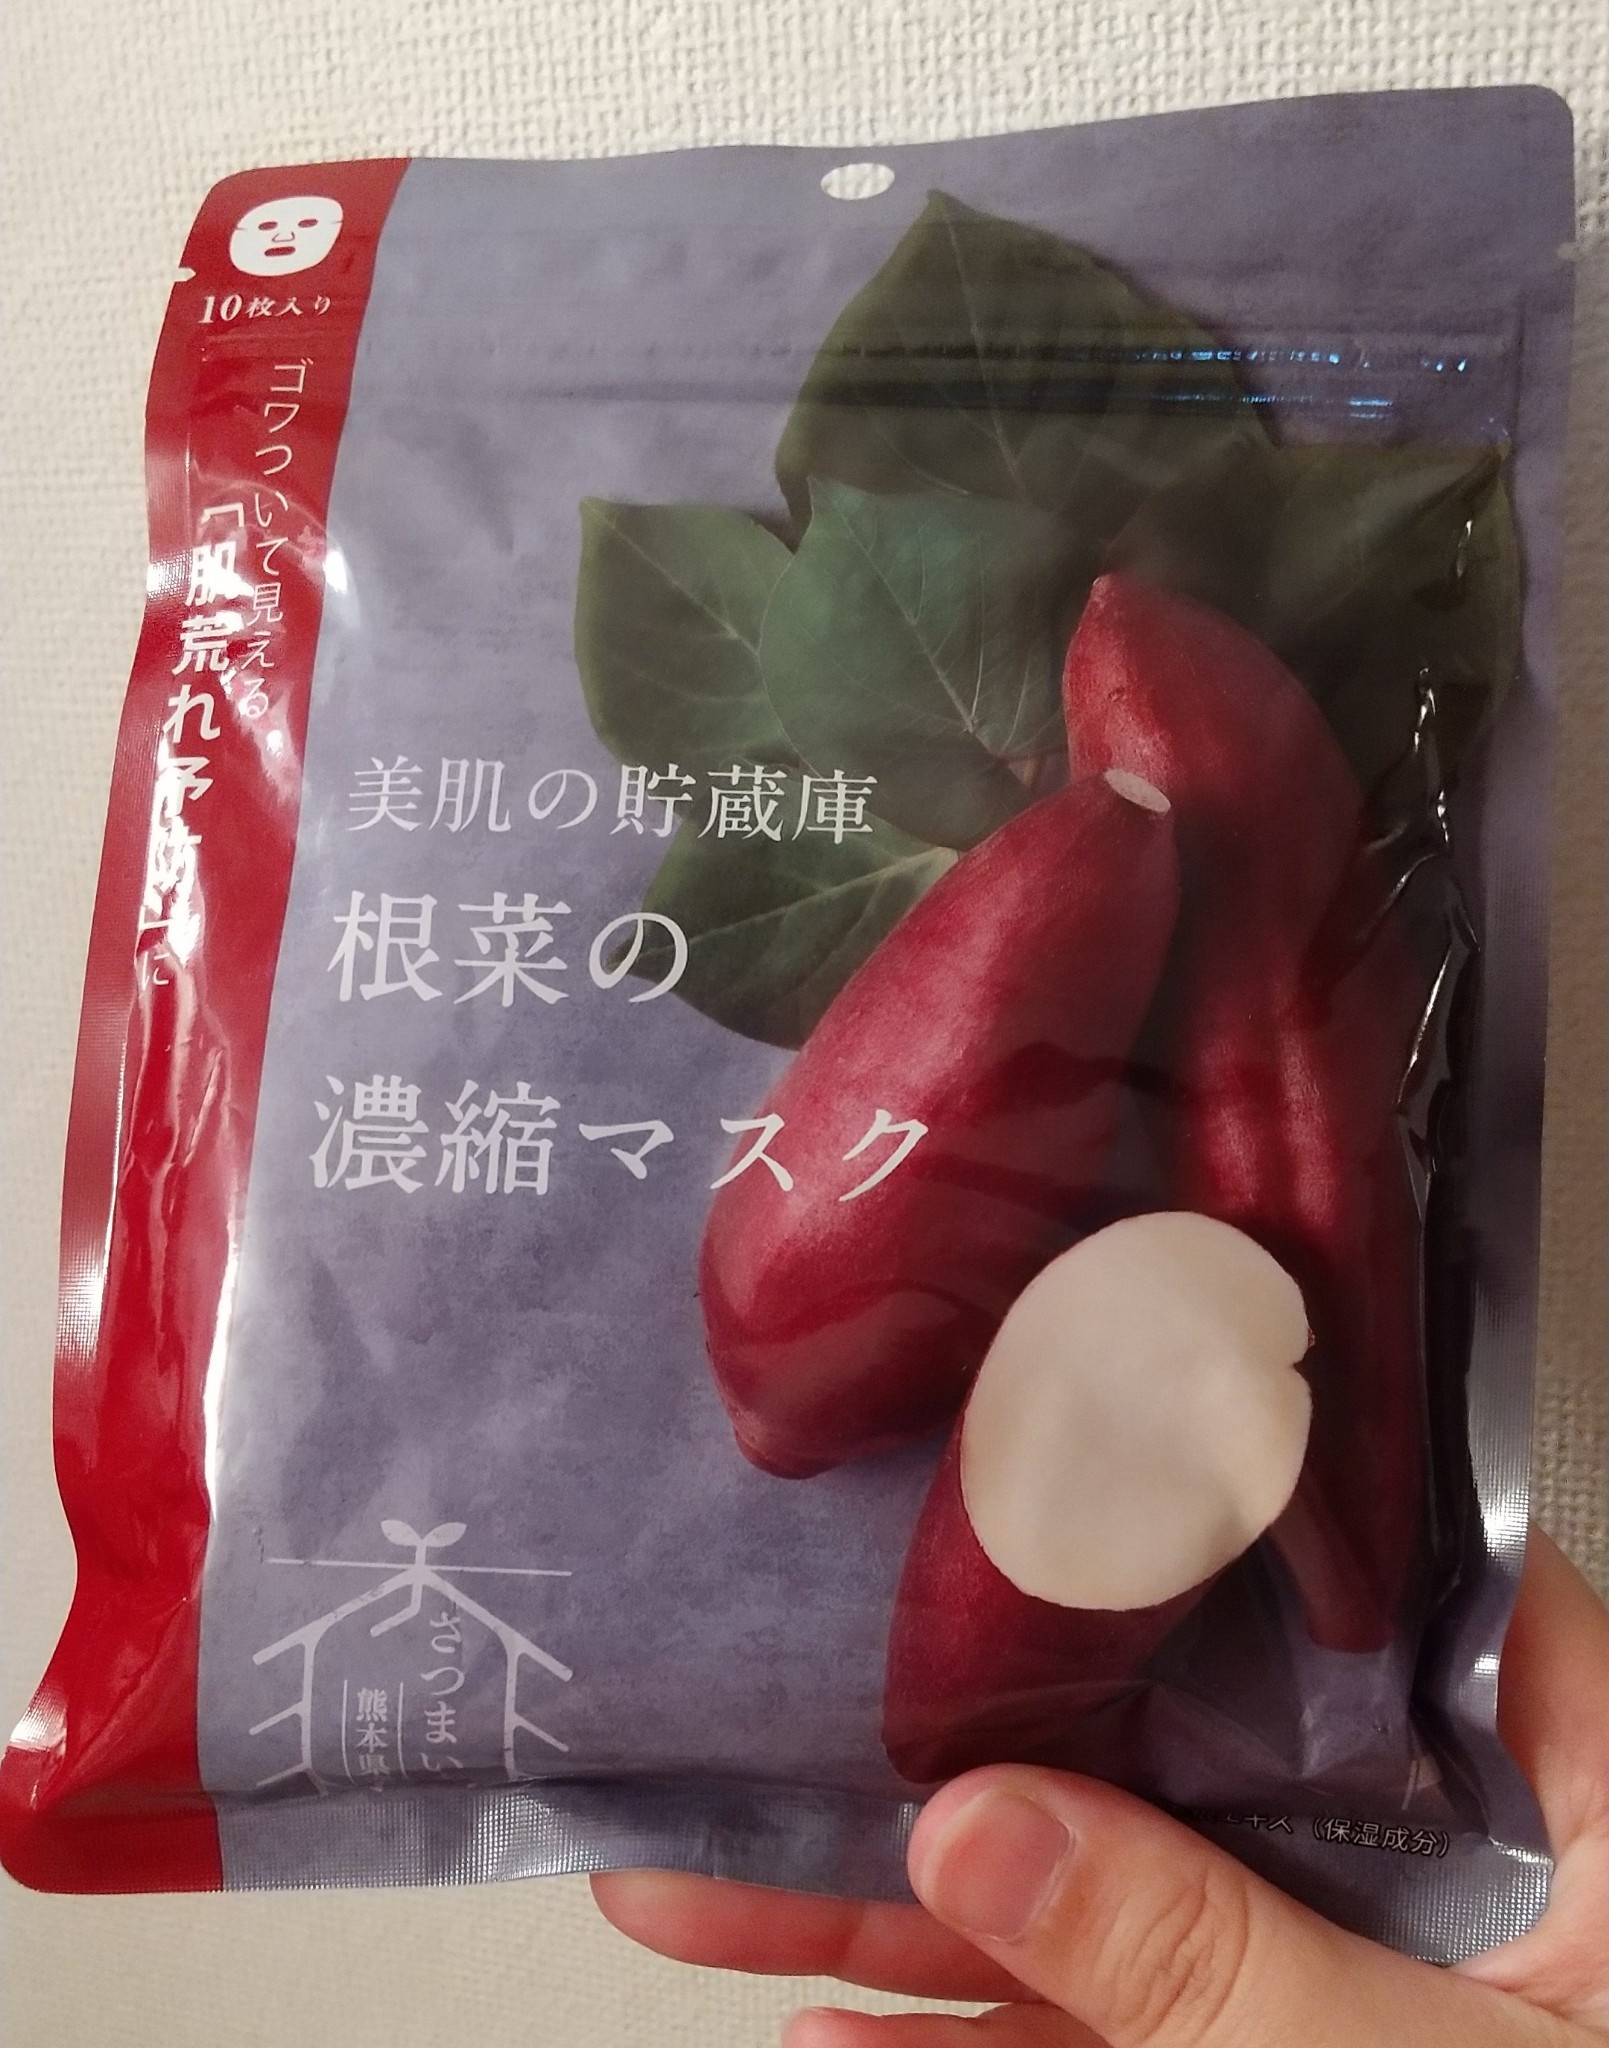 Cosme Nippon 美肌の貯蔵庫 根菜の濃縮マスク 安納芋の口コミ写真 By ぐでたまおおさん 1枚目 美容 化粧品情報はアットコスメ